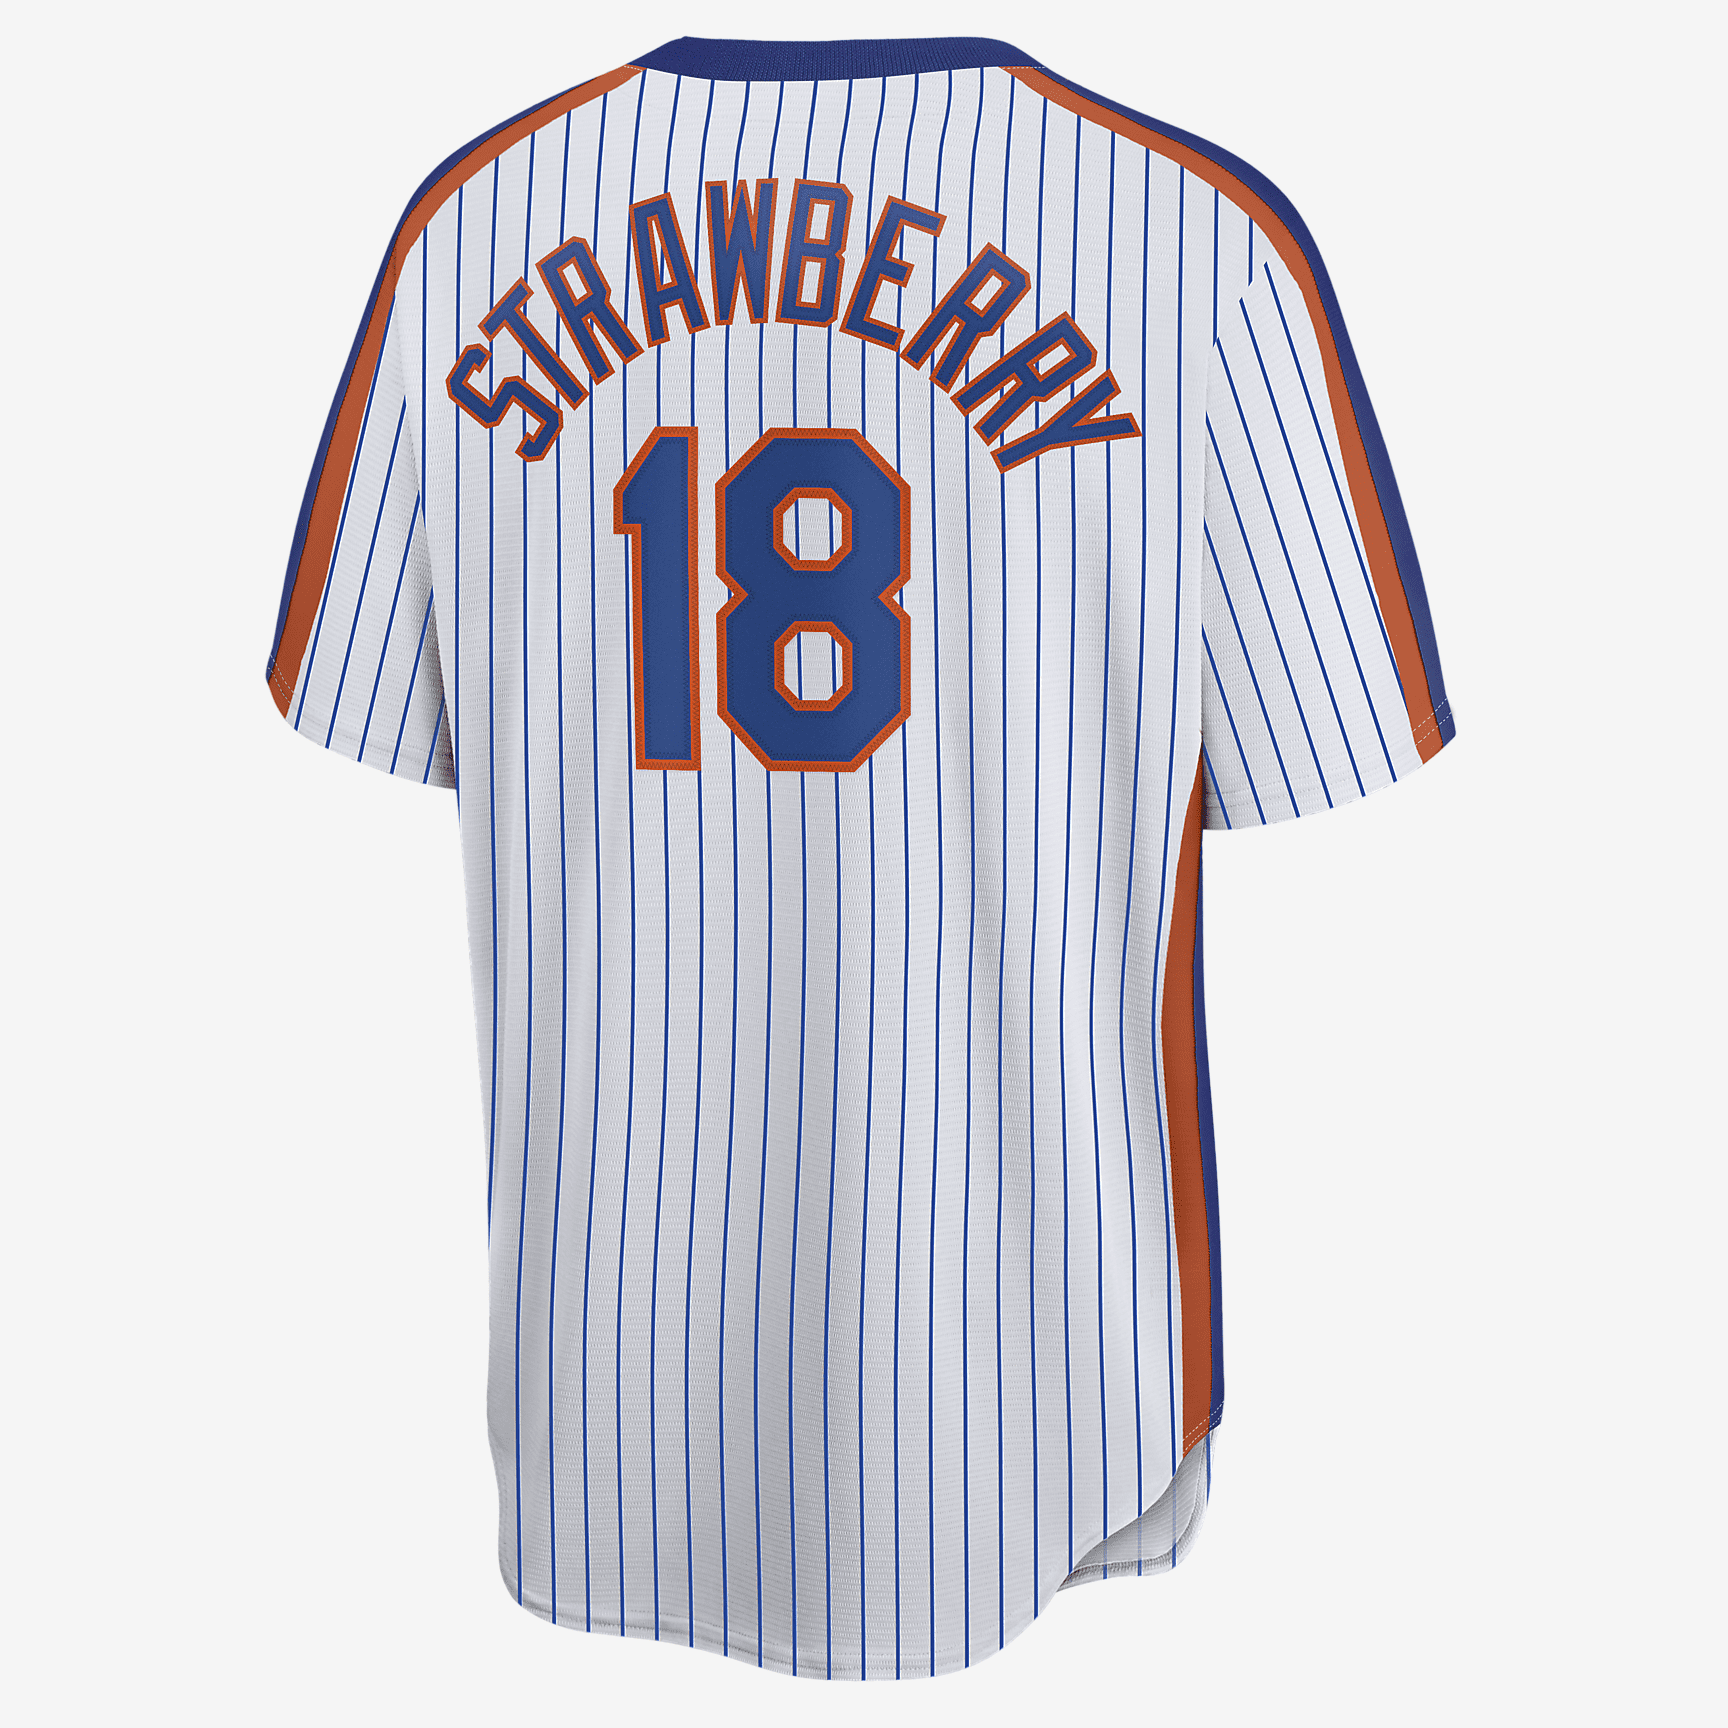 MLB New York Mets (Darryl Strawberry) Men's Cooperstown Baseball